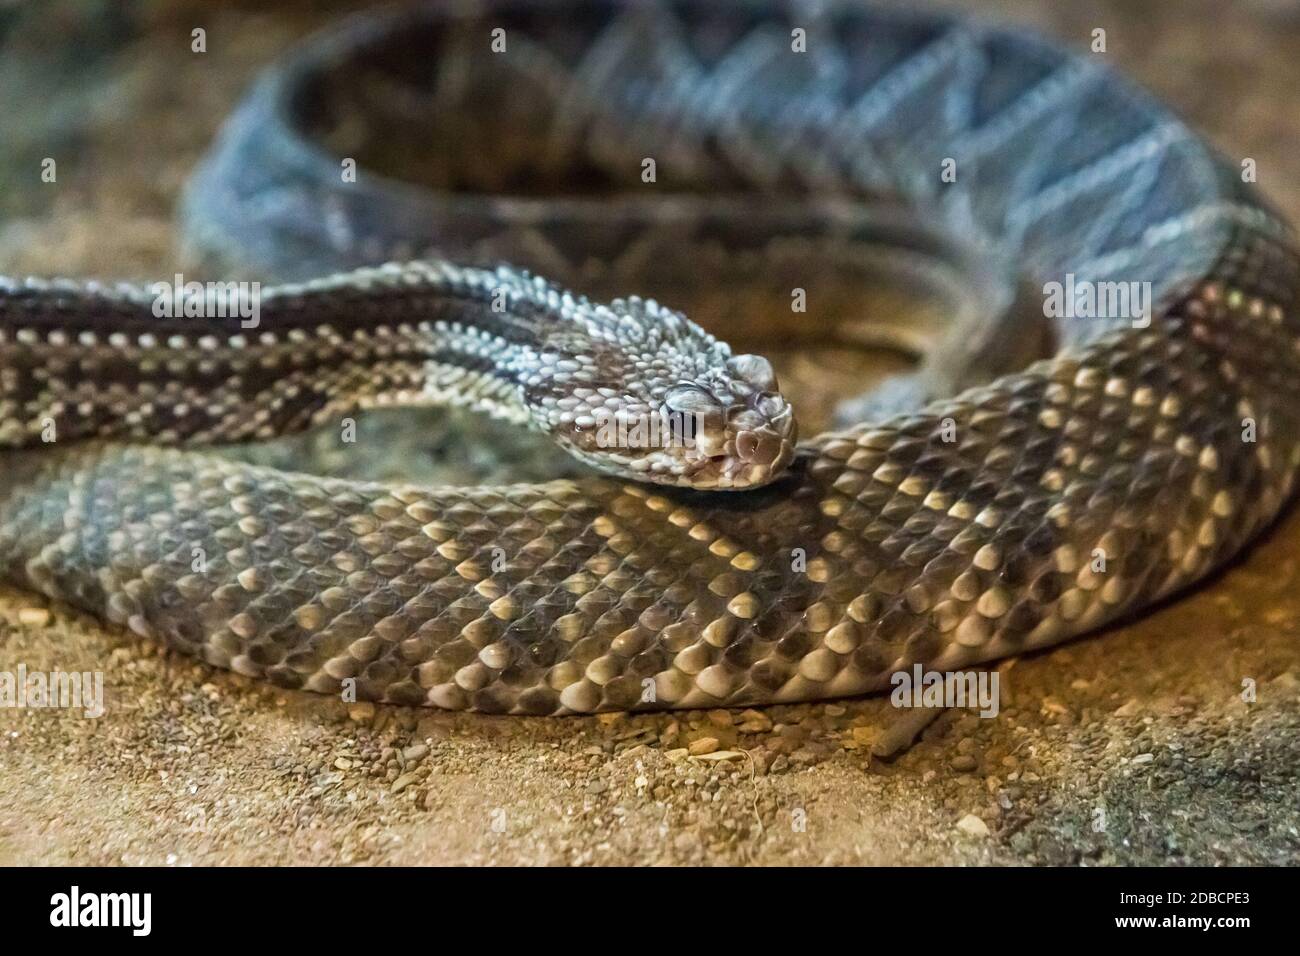 Rattlesnake, Crotalus atrox. Western Diamondback. Dangerous snake. Stock Photo